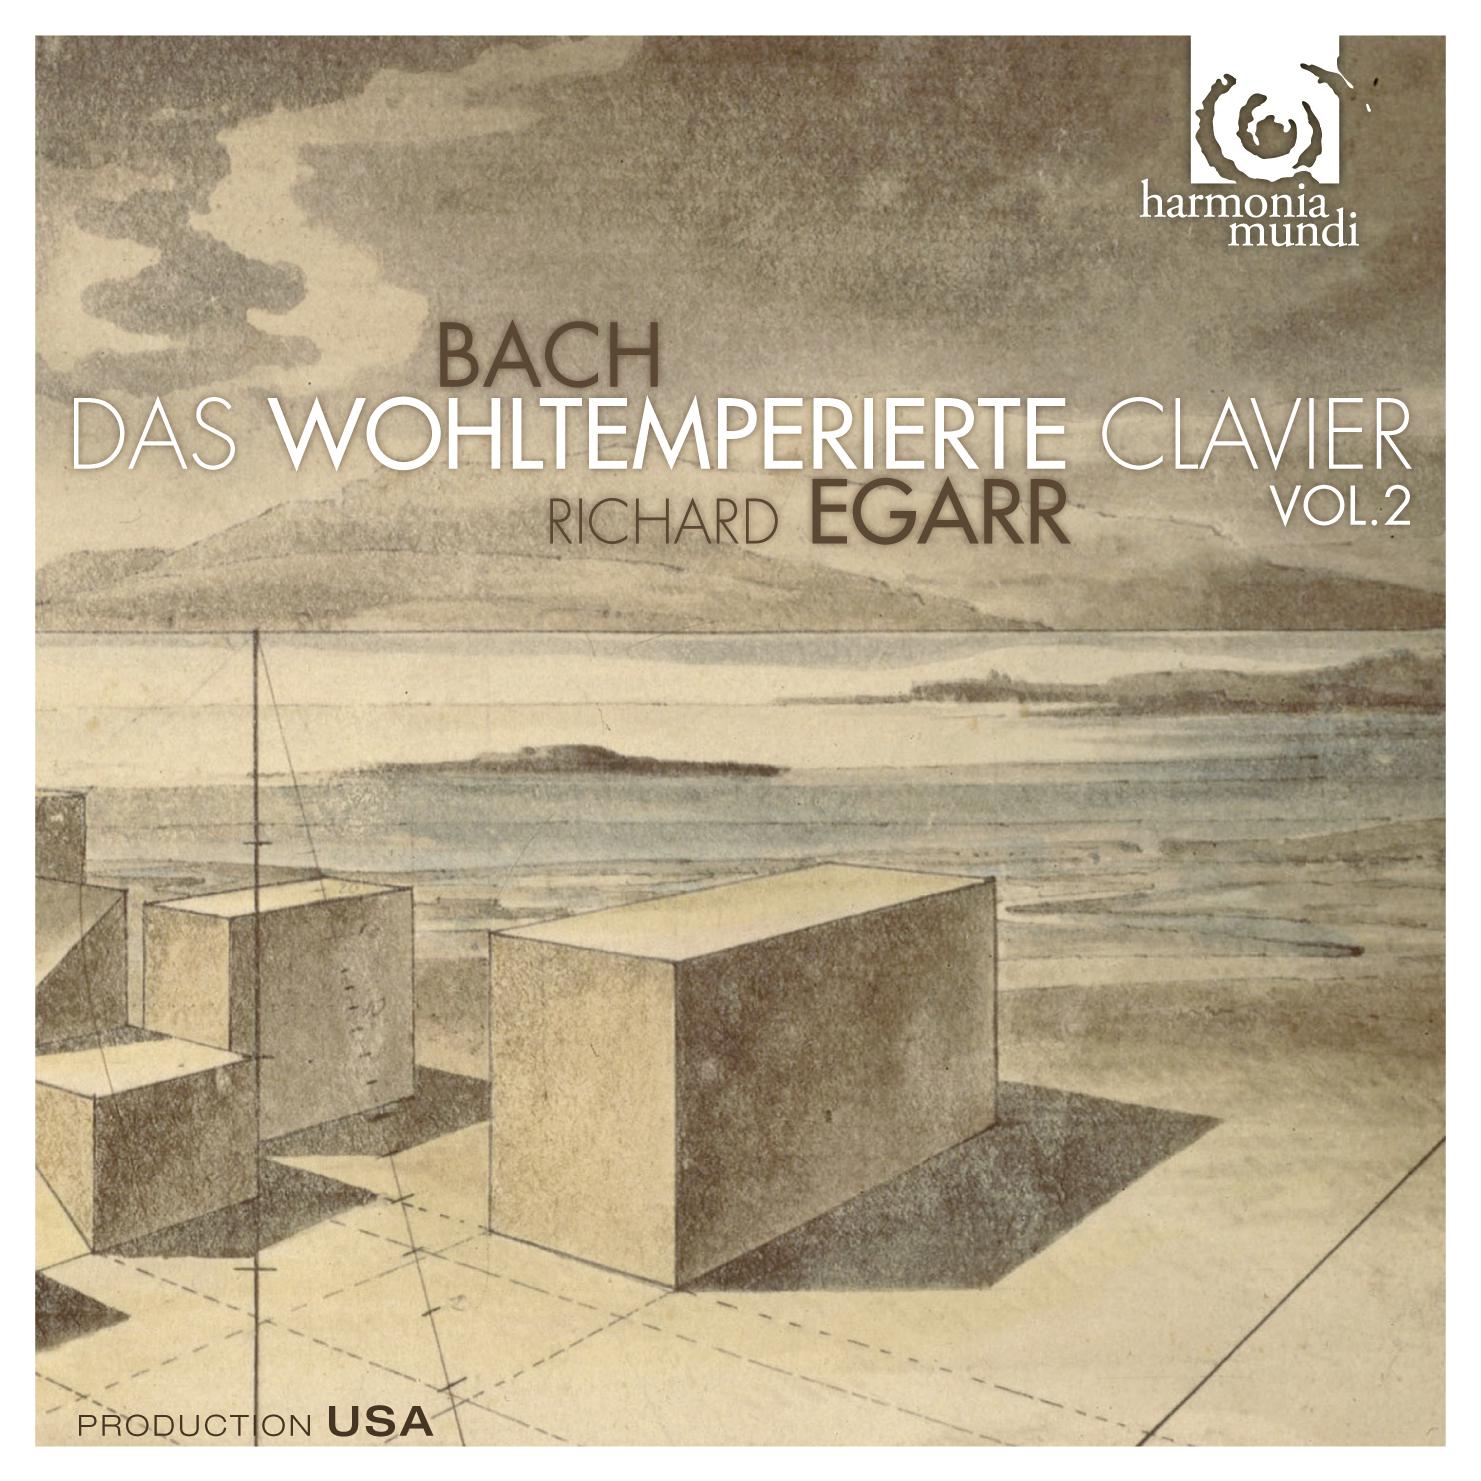 Well-Tempered Clavier, Book II, BWV 870-893: Fugue XVI in G Minor, BWV 885